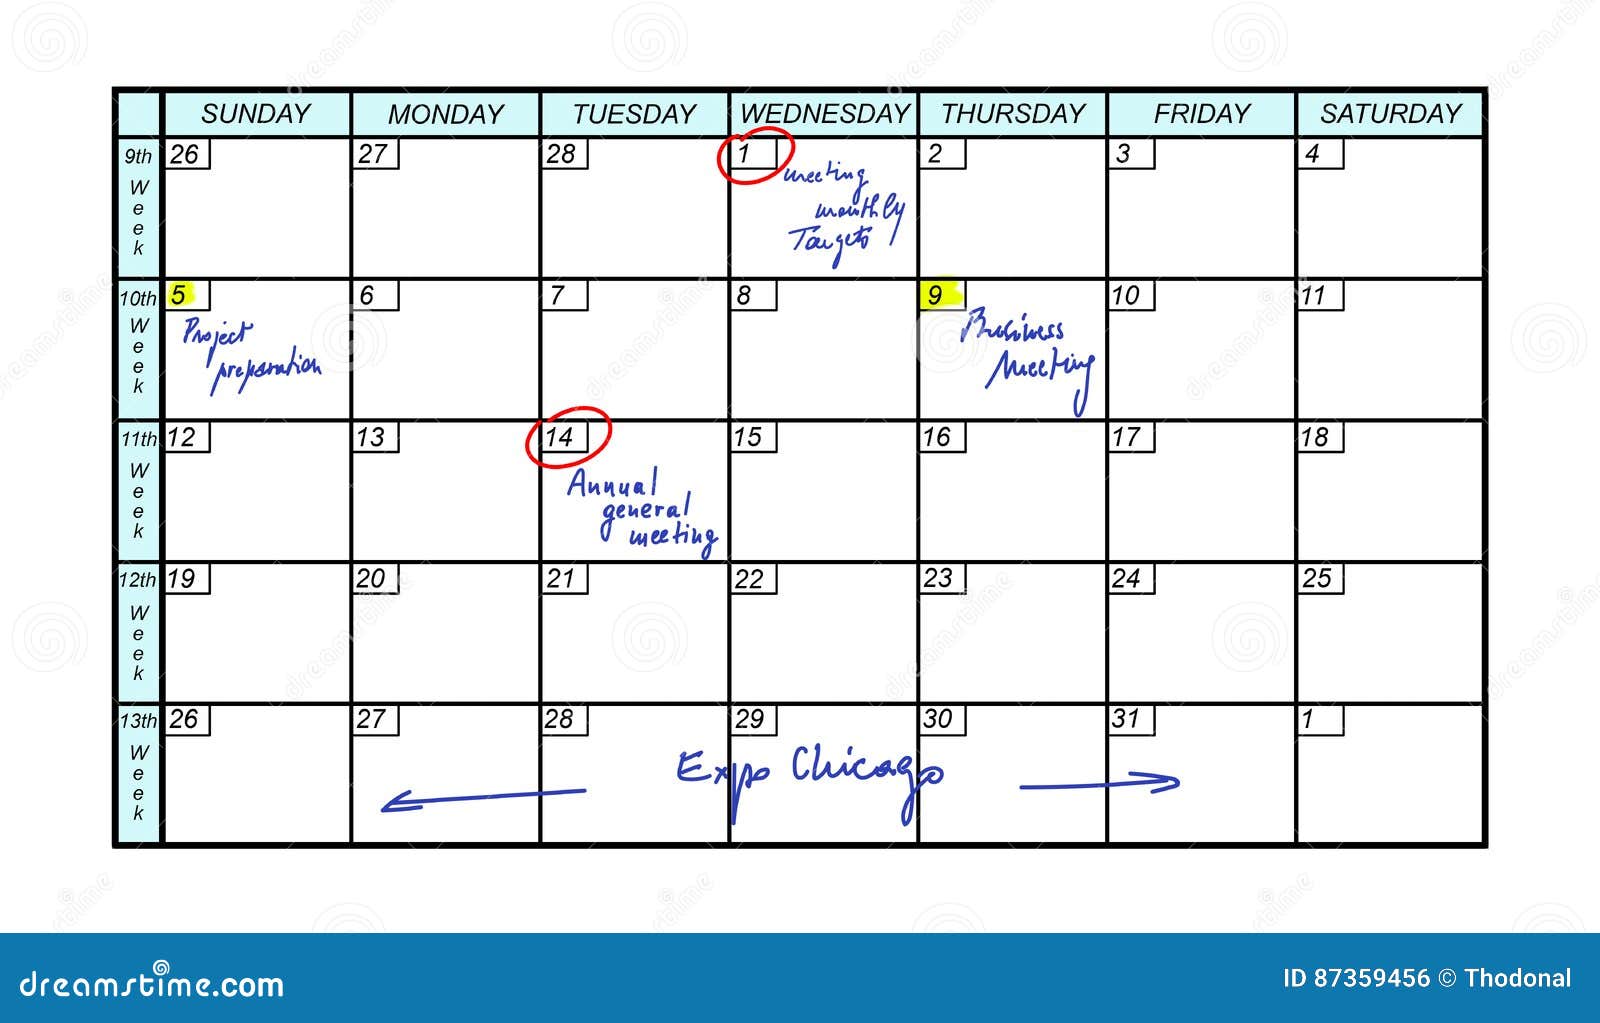 Monthly meeting calendar stock illustration. Illustration of timeline